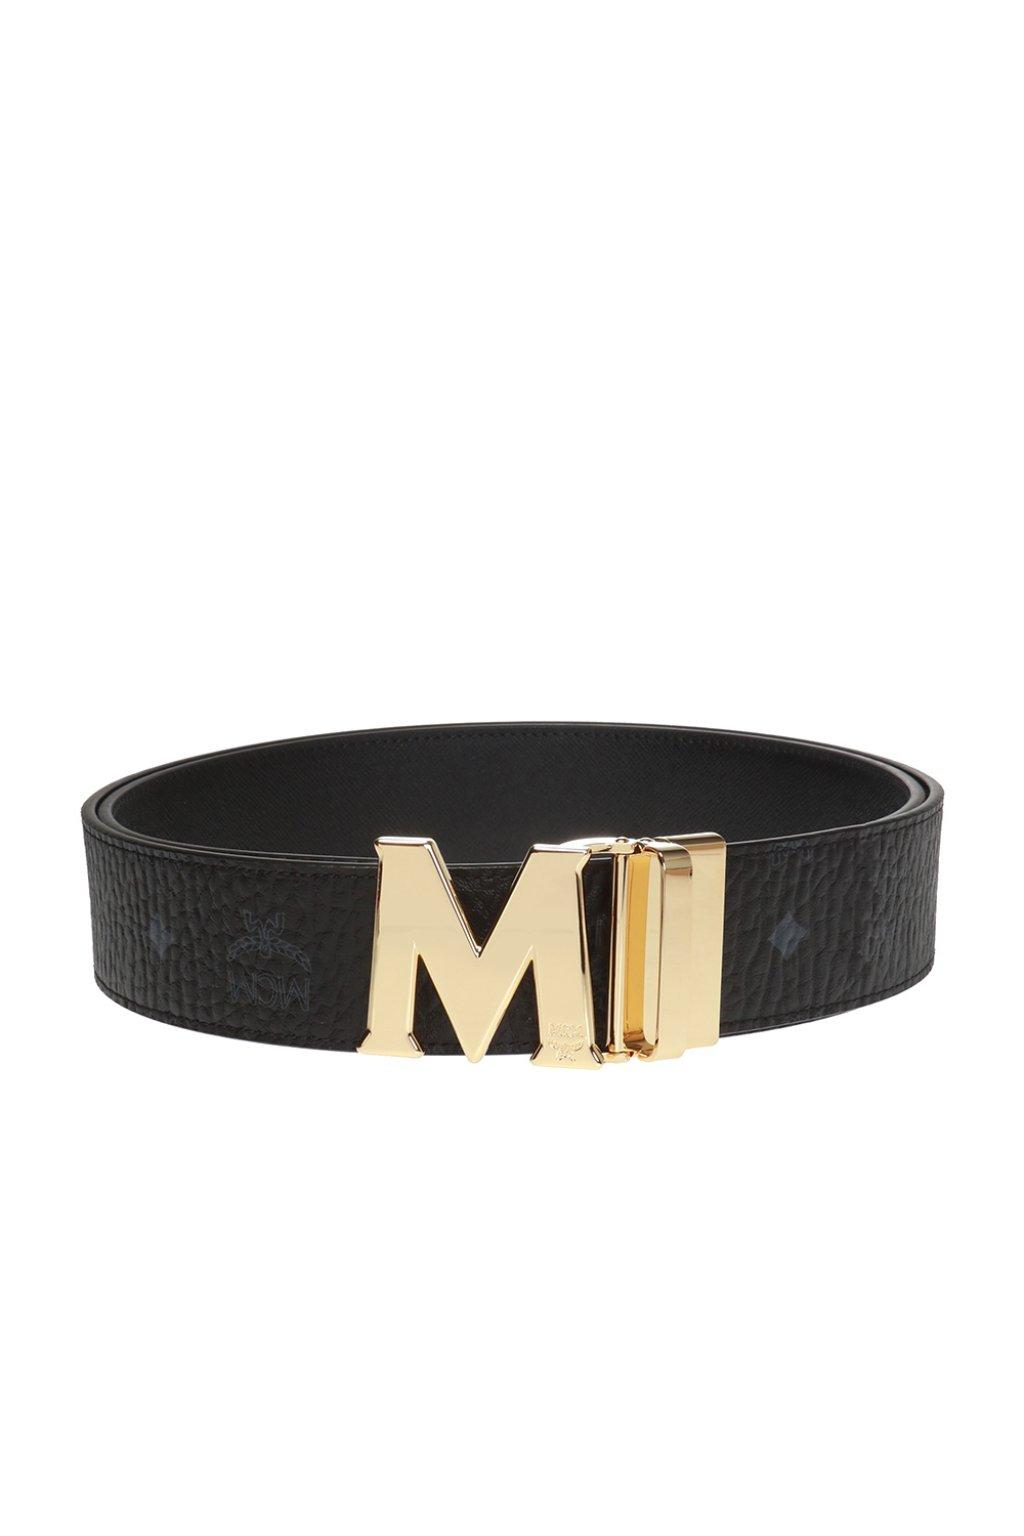 MCM Branded Belt in Black for Men - Lyst